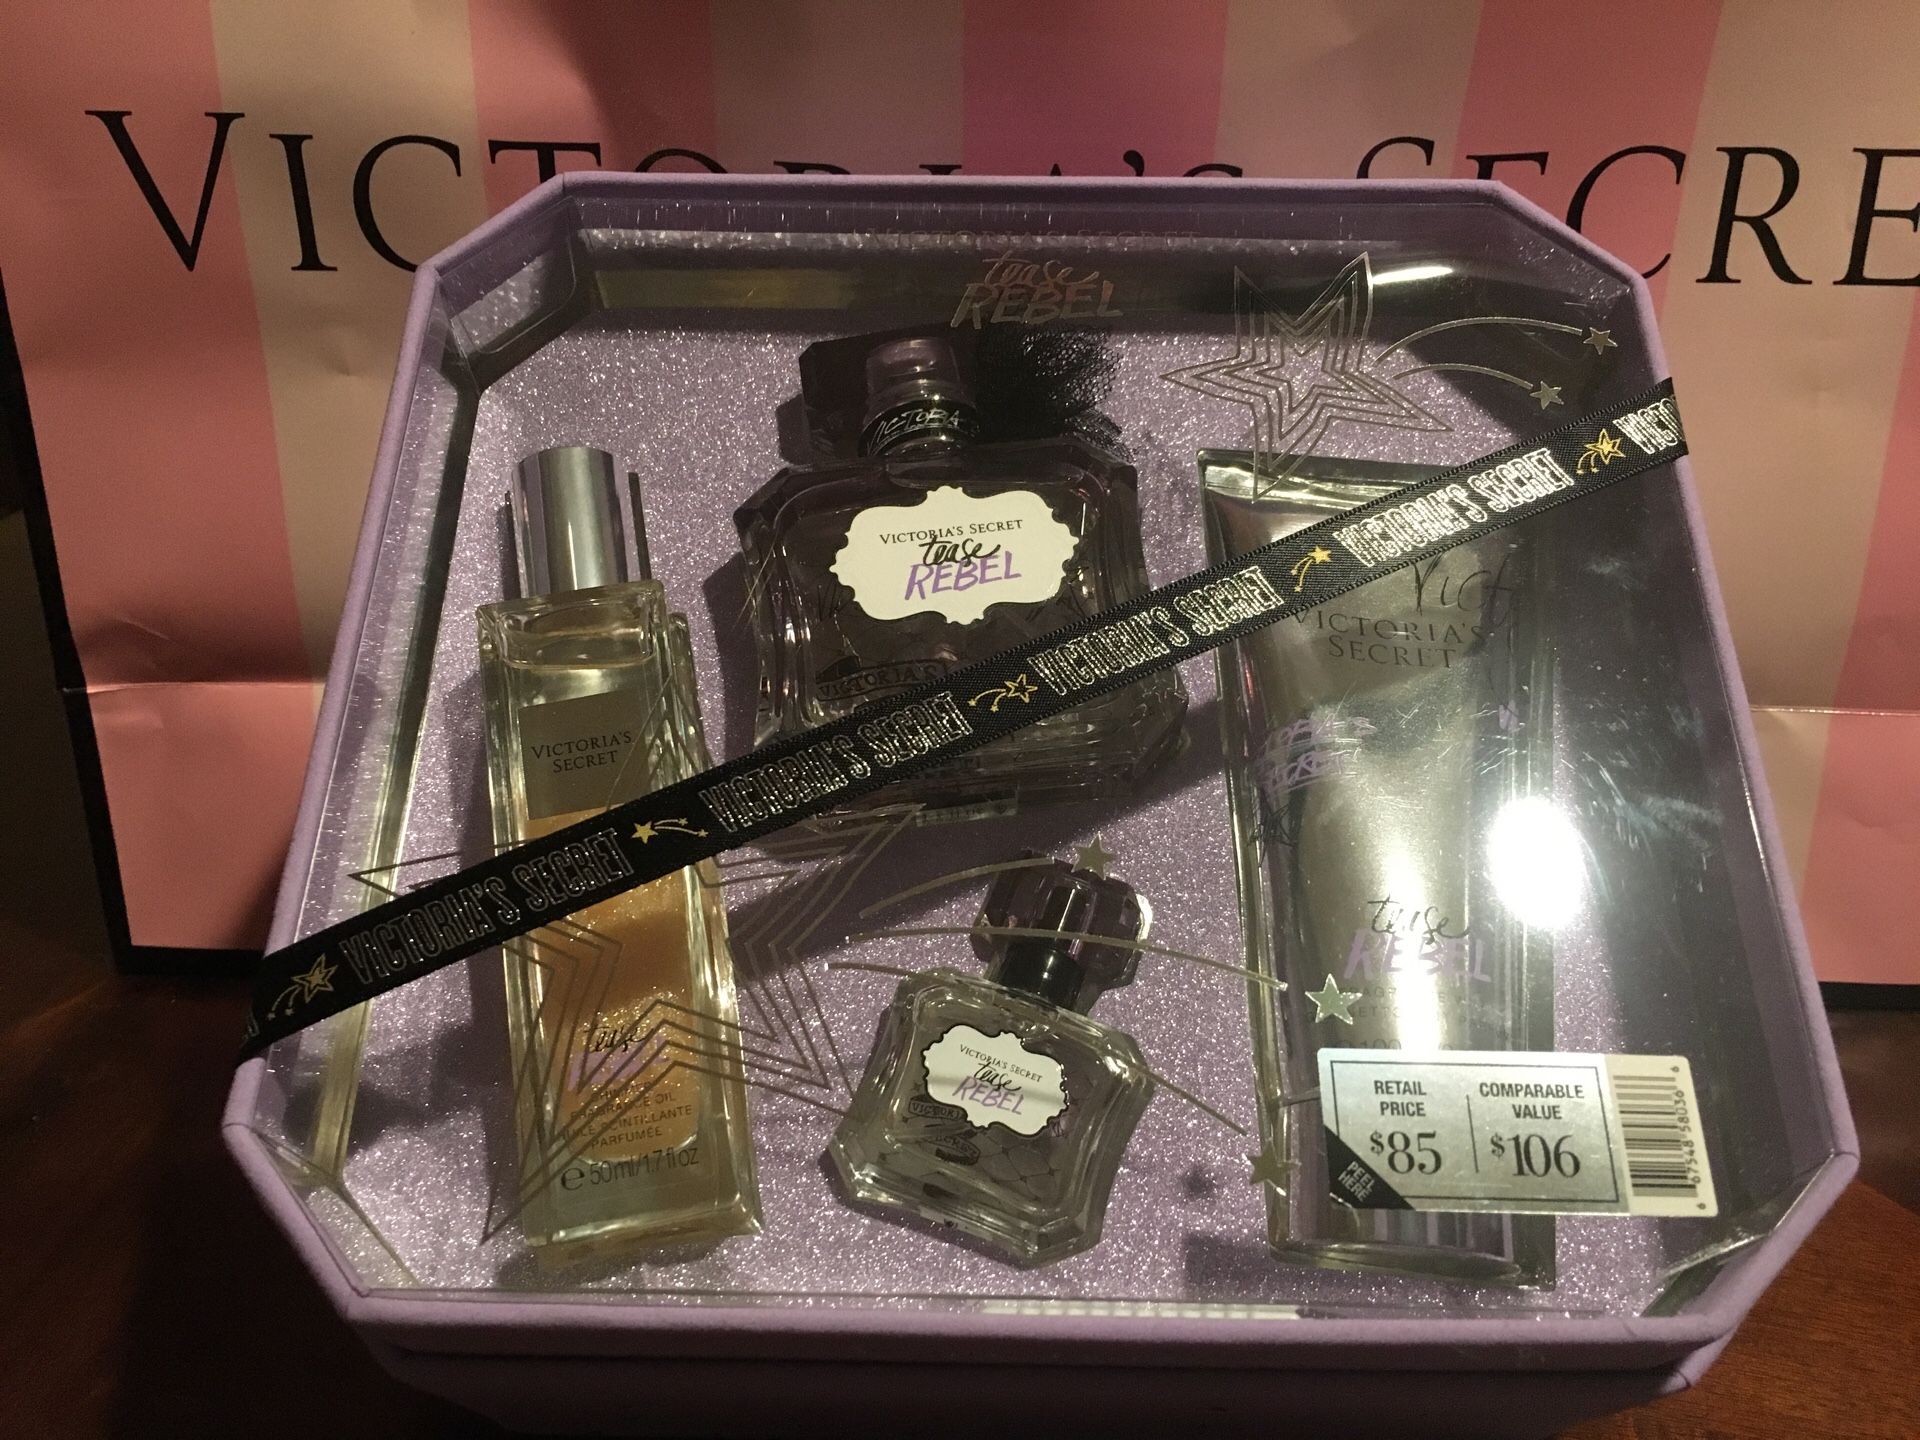 Rebel Victoria’s Secret perfume set